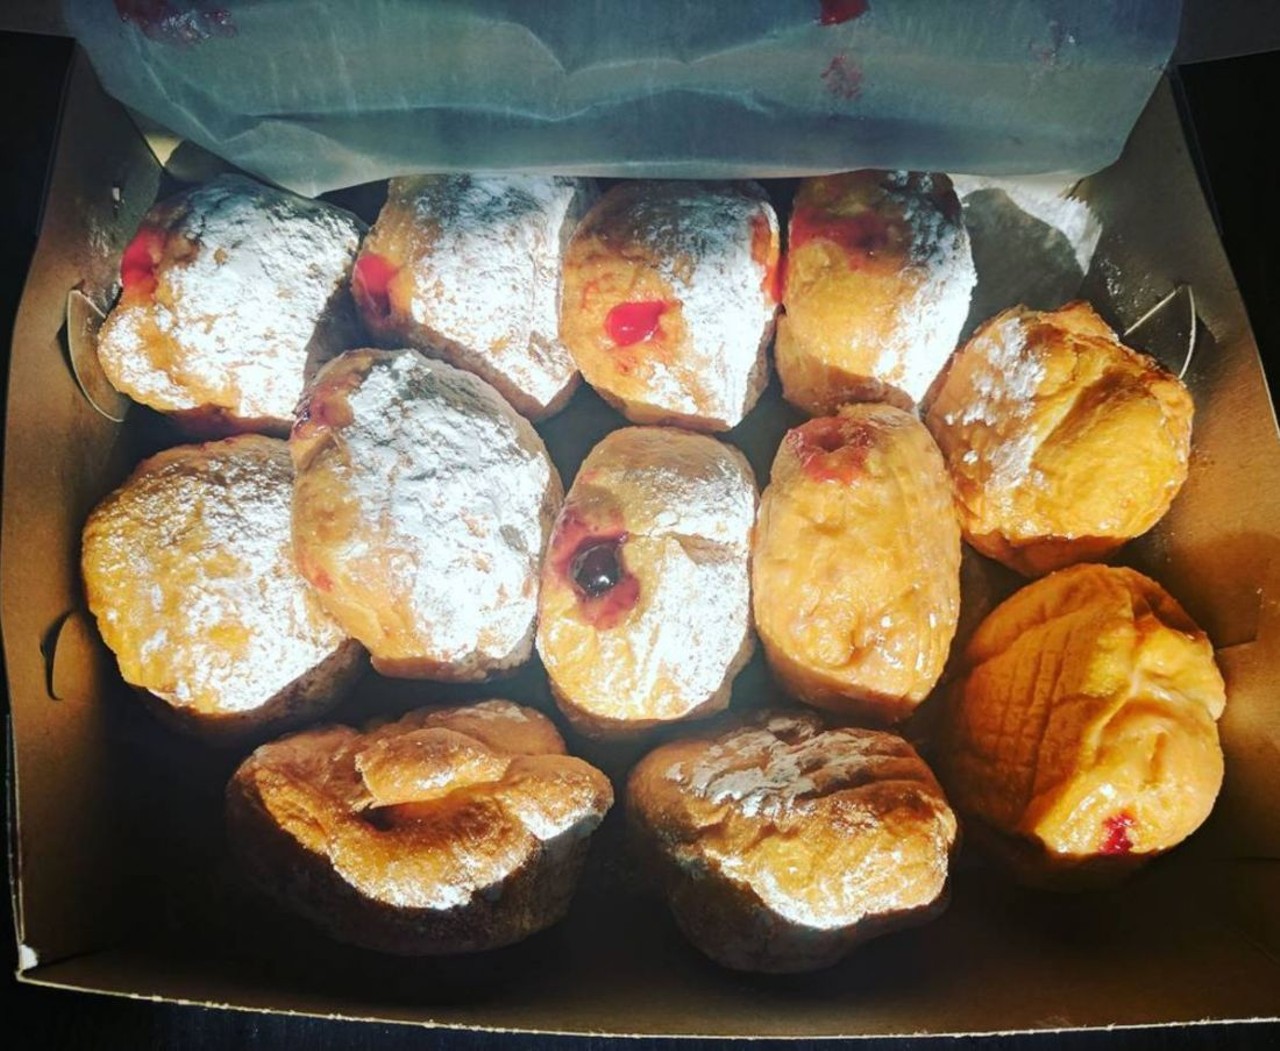 New Palace Bakery
You&#146;ll find generously sized paczki at this authentic Polish bakery.
9833 Joseph Campau Ave., Hamtramck; 313-875-1334. Photo via Instagram user dashheathen.